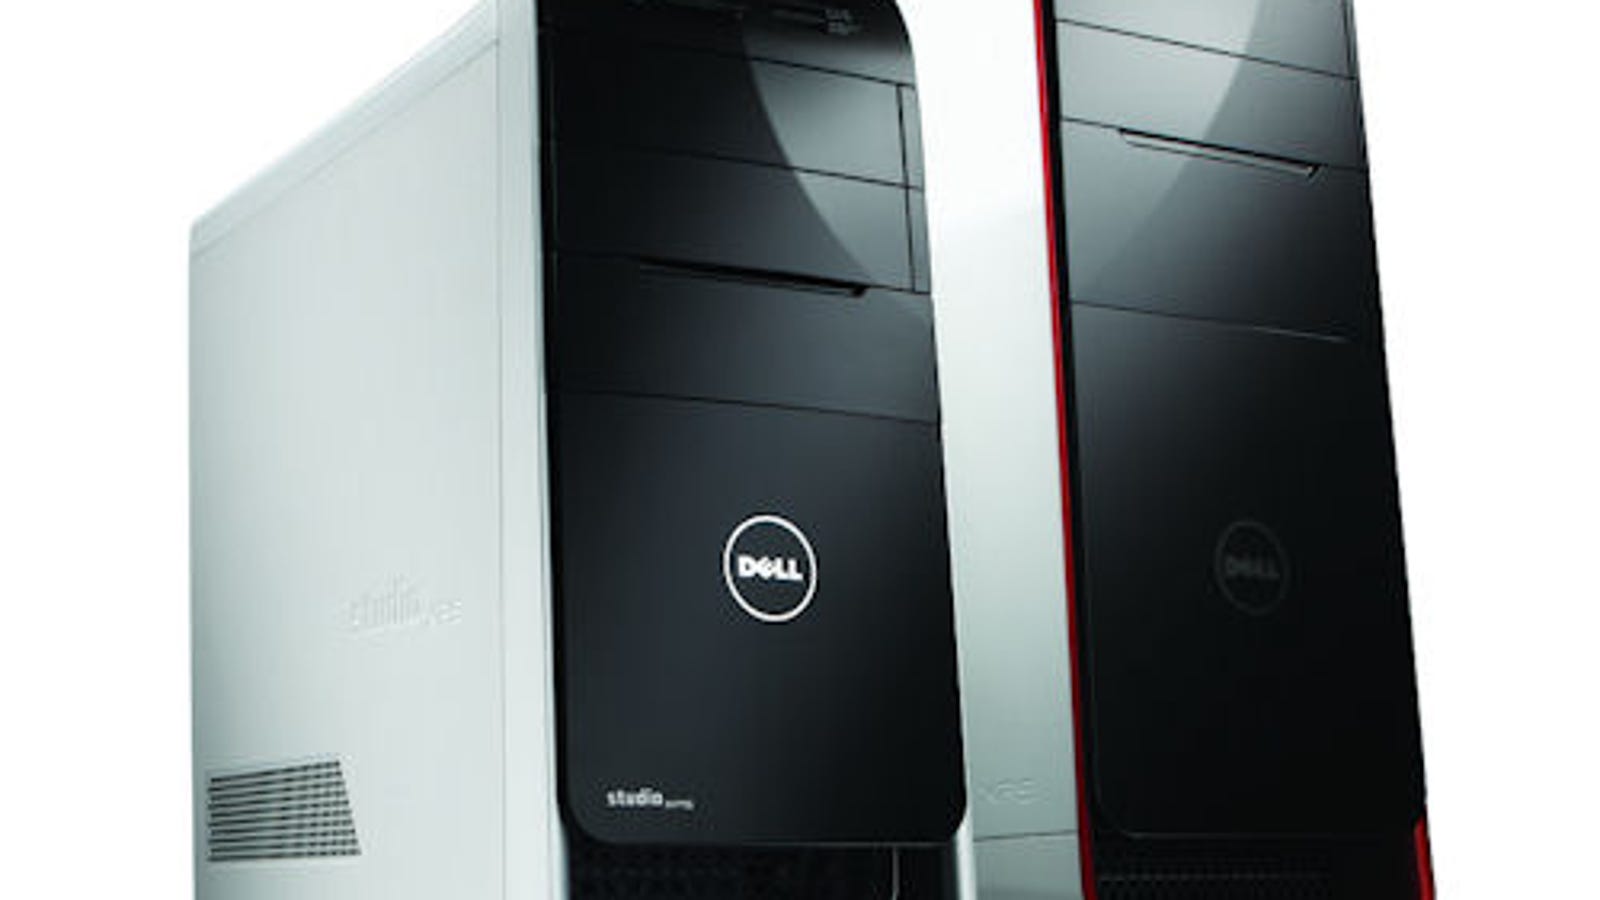 Dell Studio Xps 8000 9000 Desktops Look Good Use Latest Intel Chips